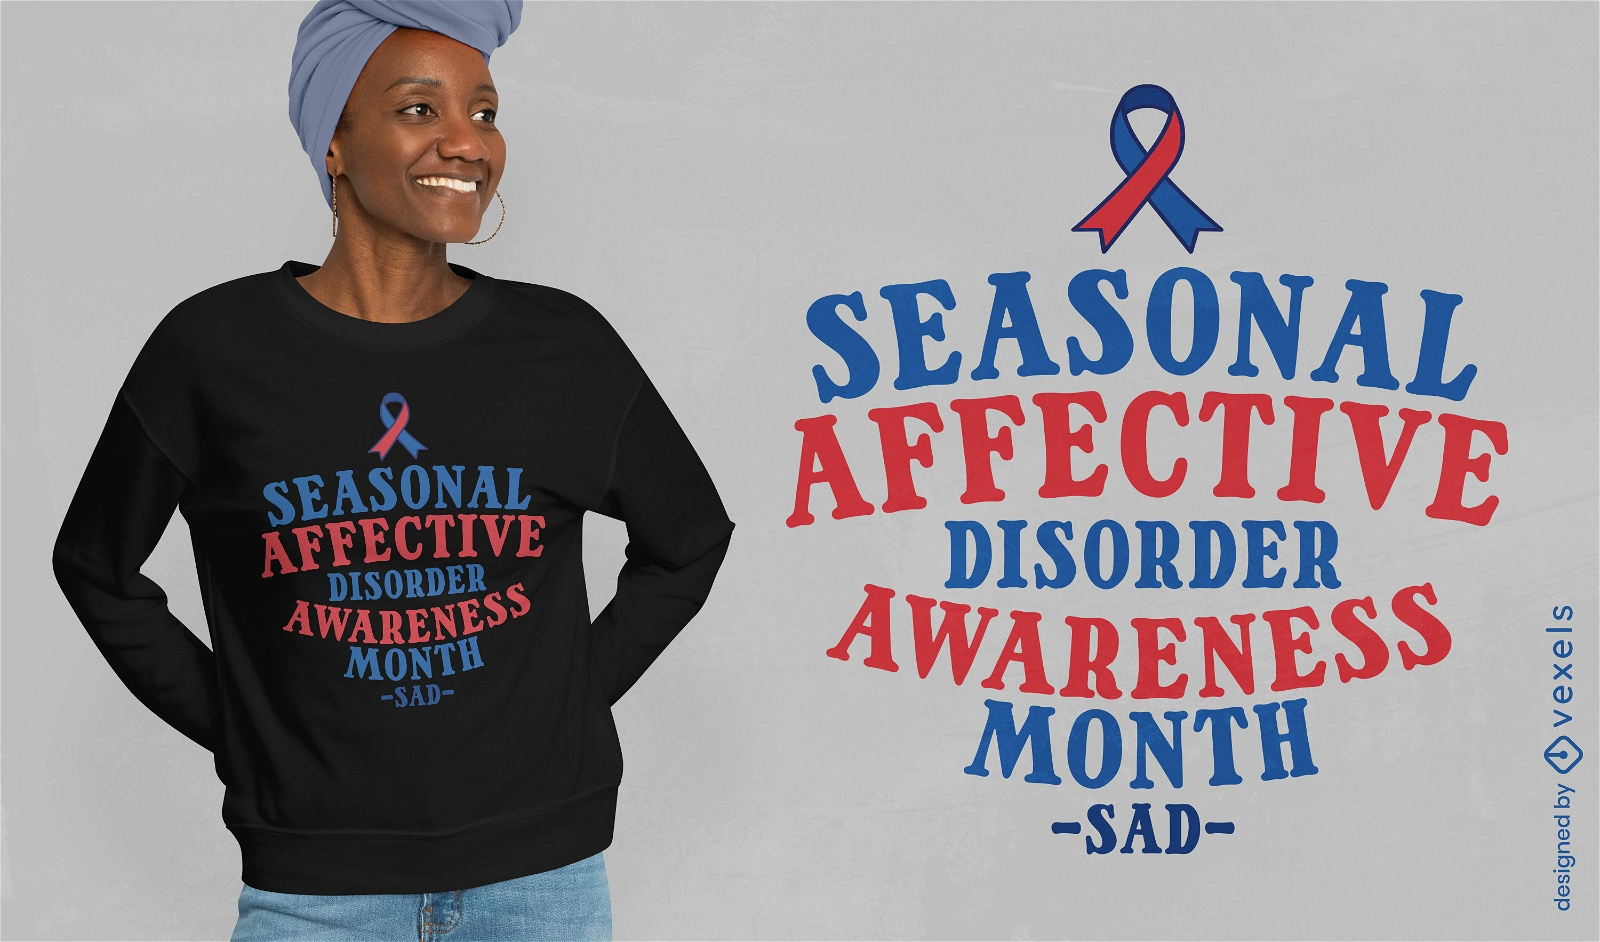 Seasonal Affective Disorder awareness t-shirt design